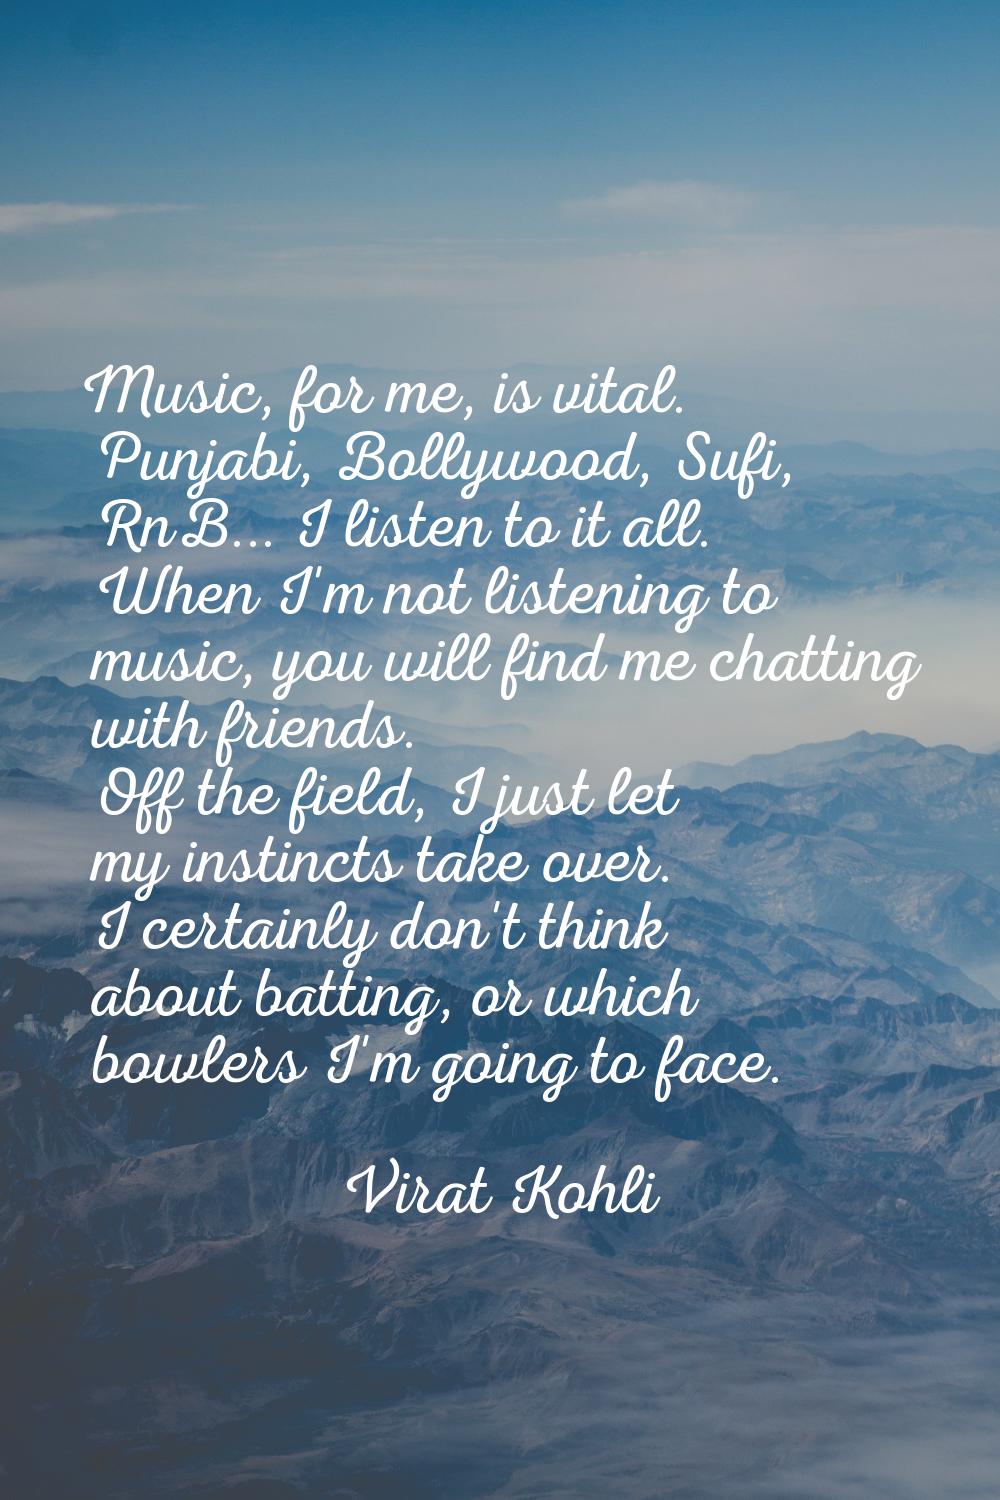 Music, for me, is vital. Punjabi, Bollywood, Sufi, RnB... I listen to it all. When I'm not listenin